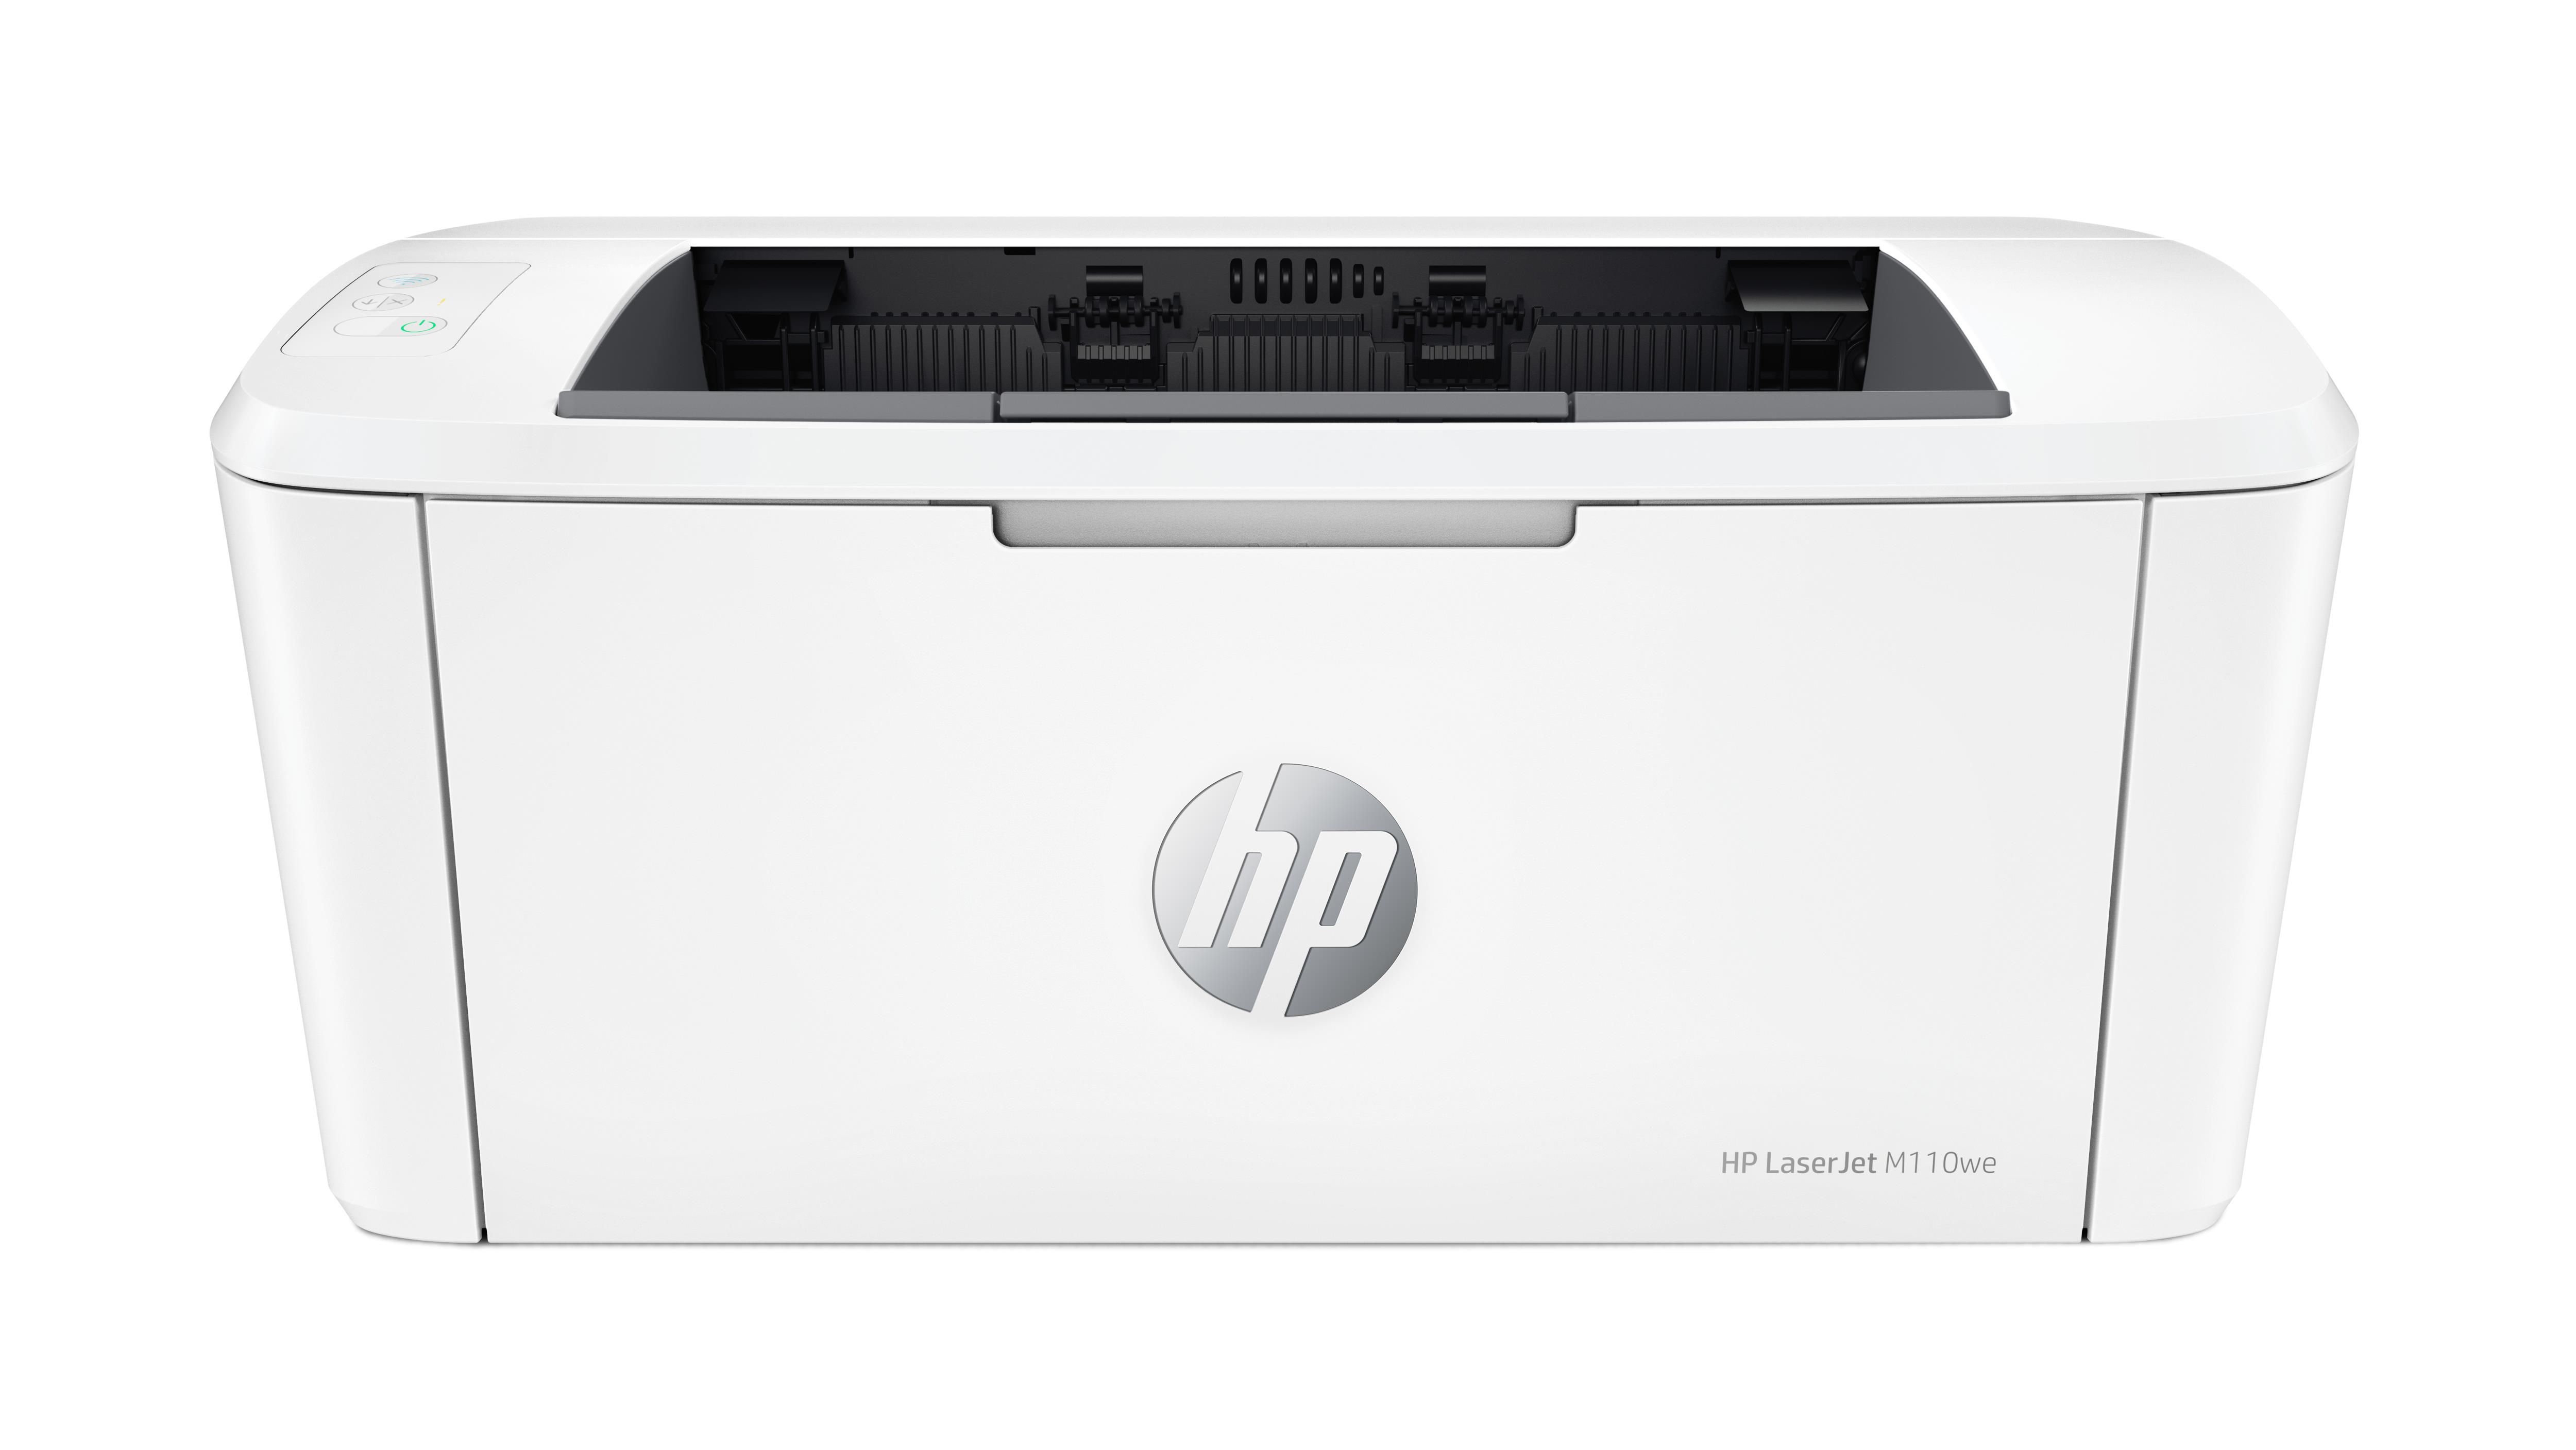 [ComeNuovo] HP LaserJet M110we